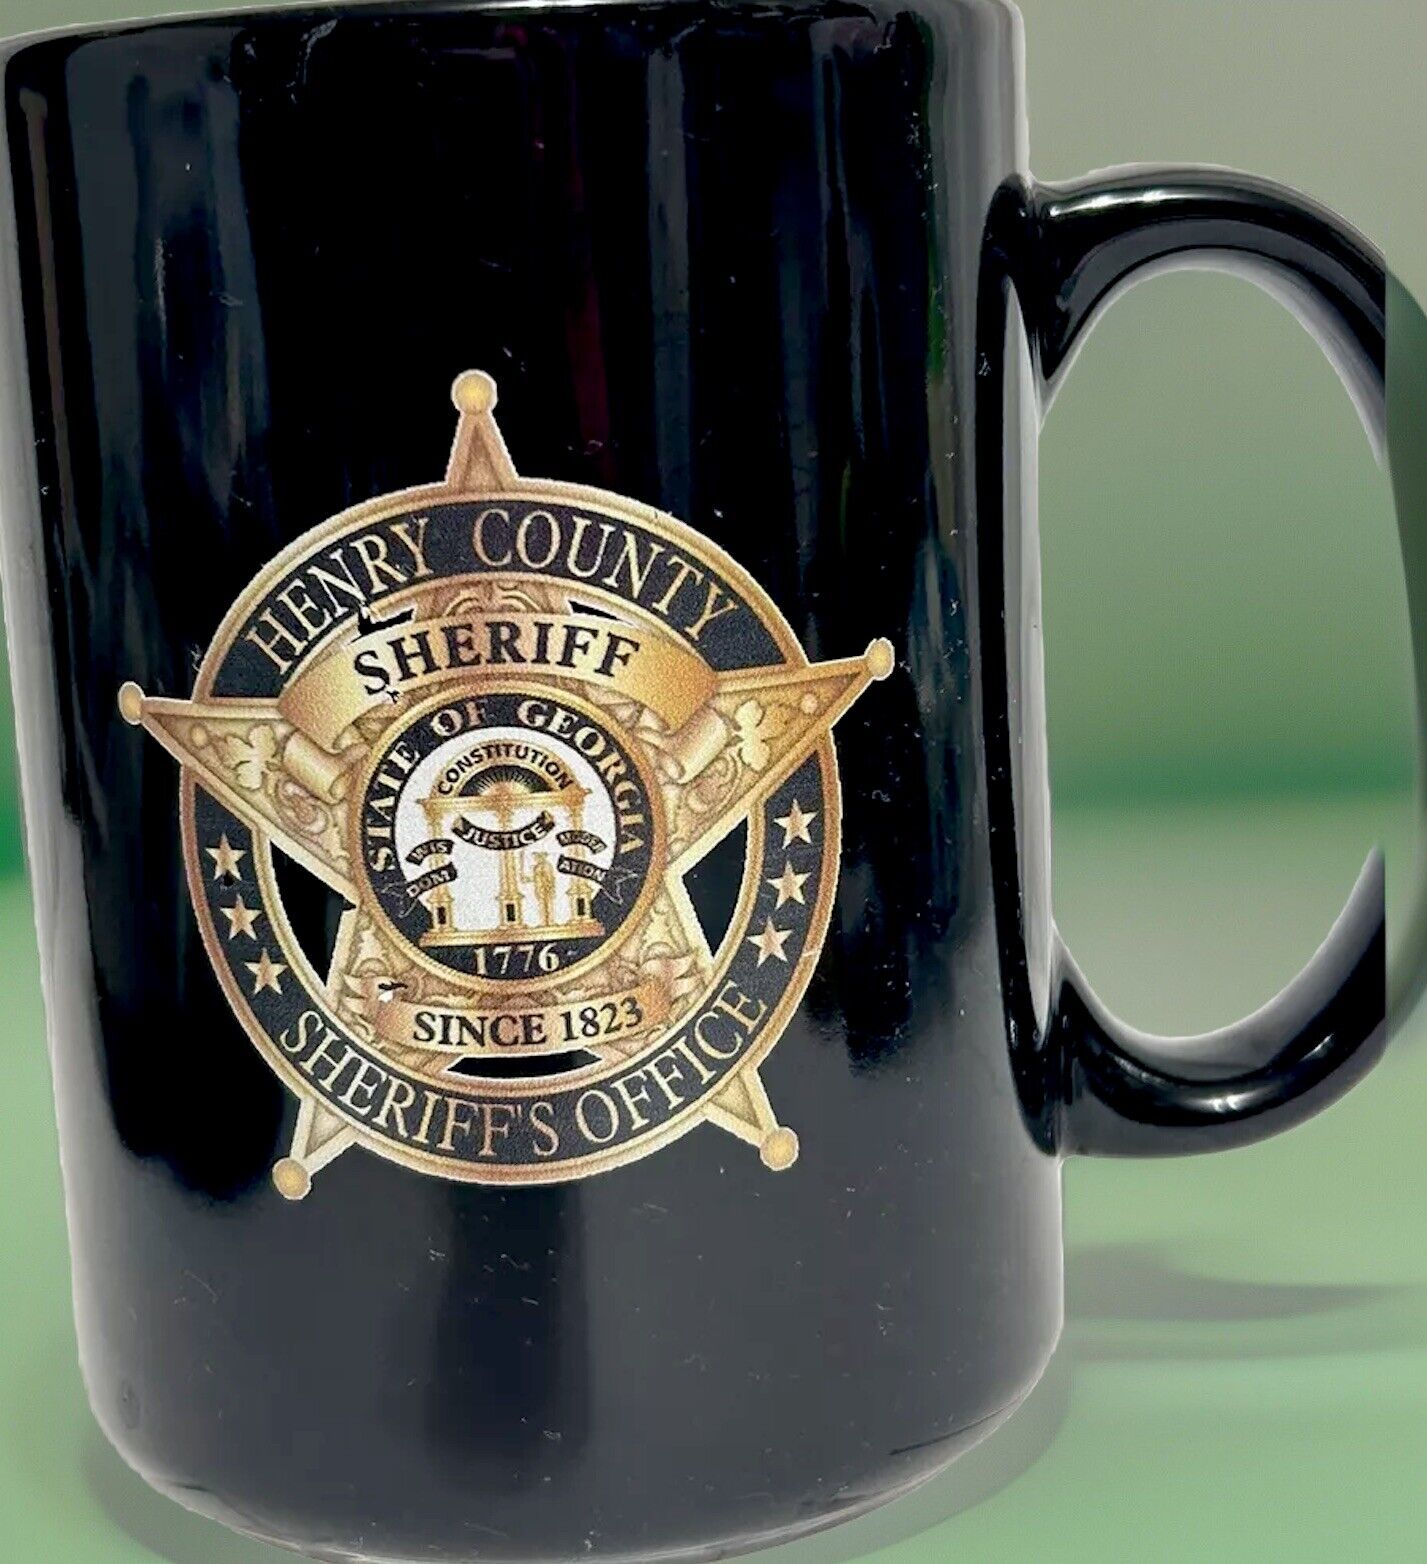 Henry County,Georgia Sheriff Department Coffee Mug, Black